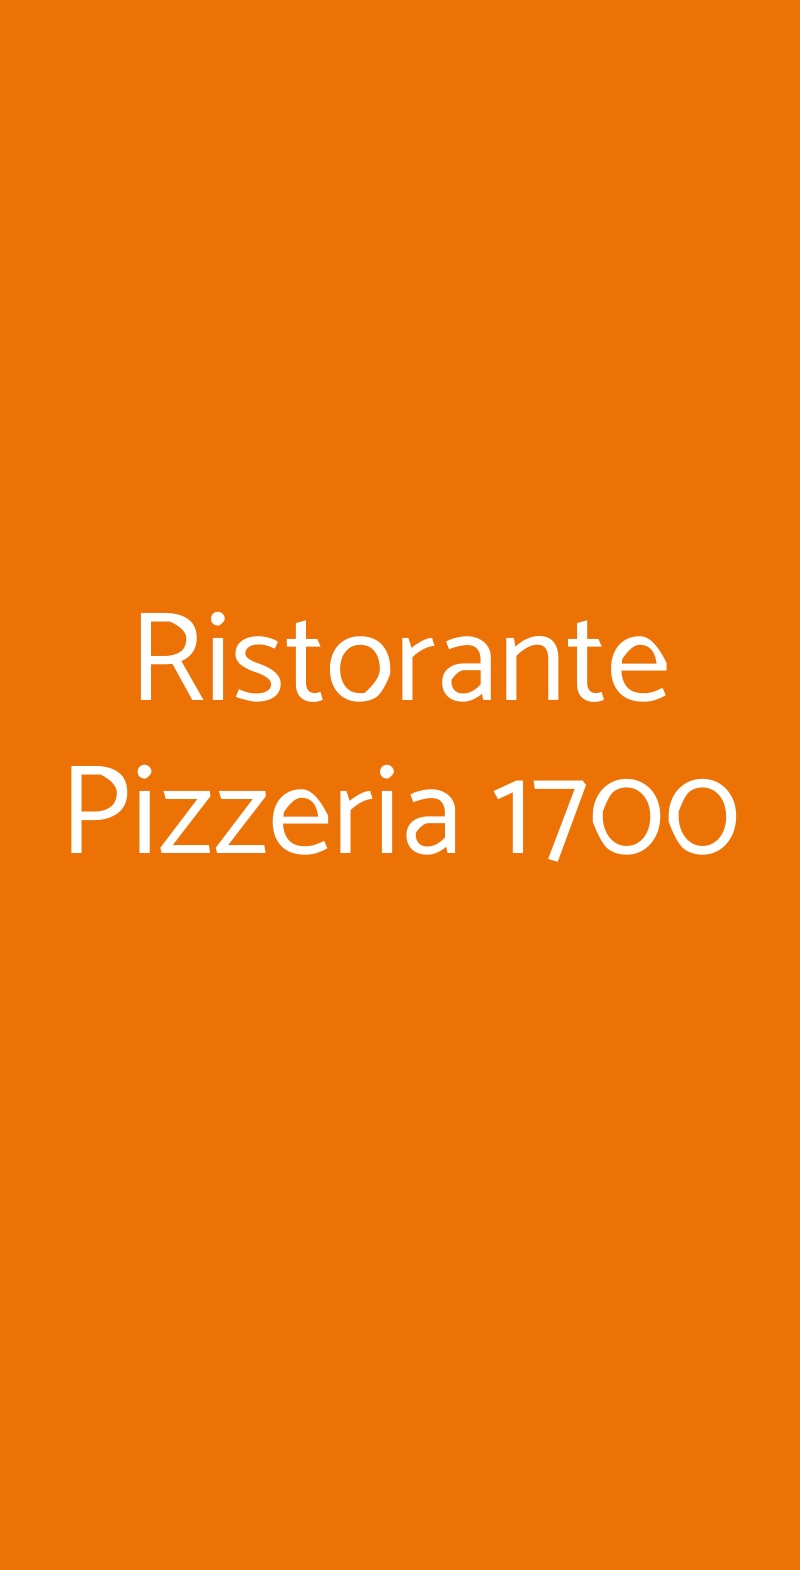 Ristorante Pizzeria 1700 Roma menù 1 pagina